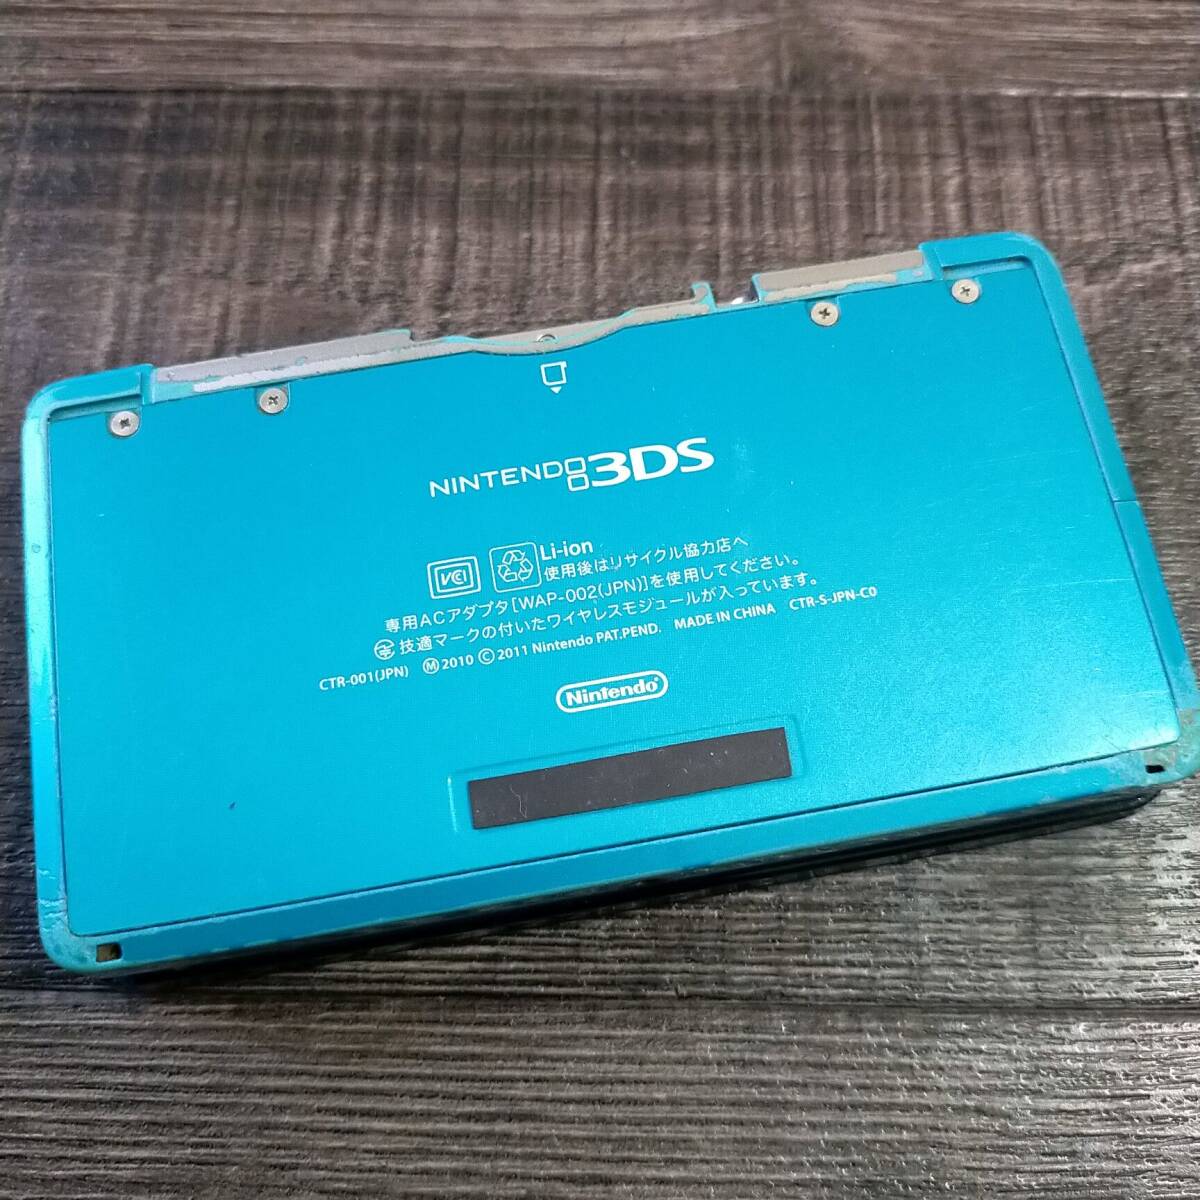 3ds 本体 アクアブルー 青 NINTENDO 3DS 中古 任天堂 送料無料 動作確認◎ 05131